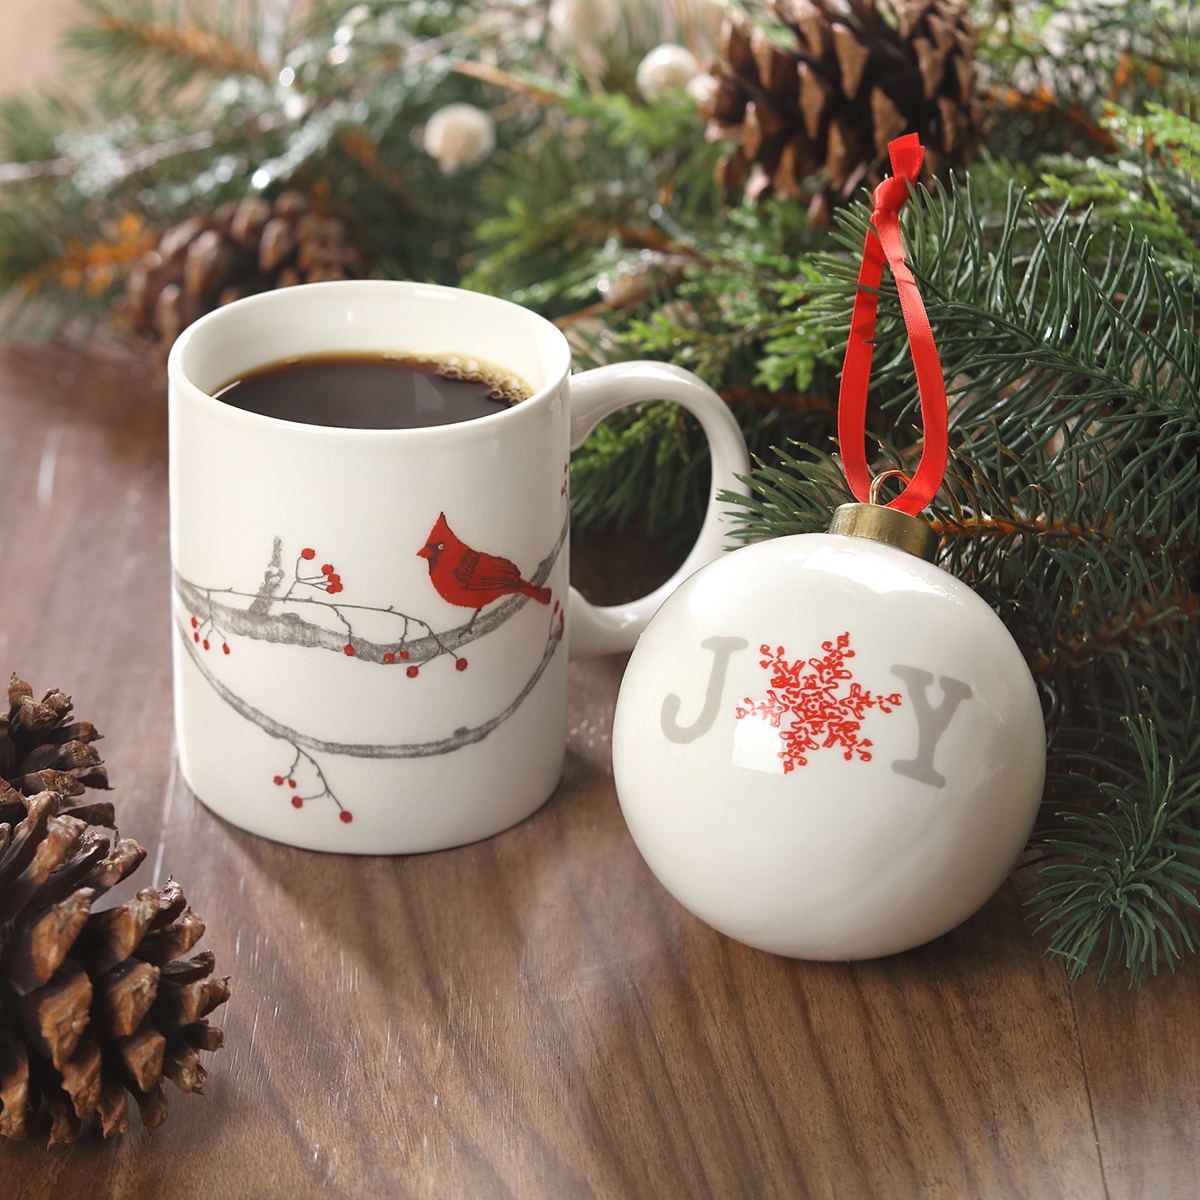 Winter Scenes Mug and Ornament Set